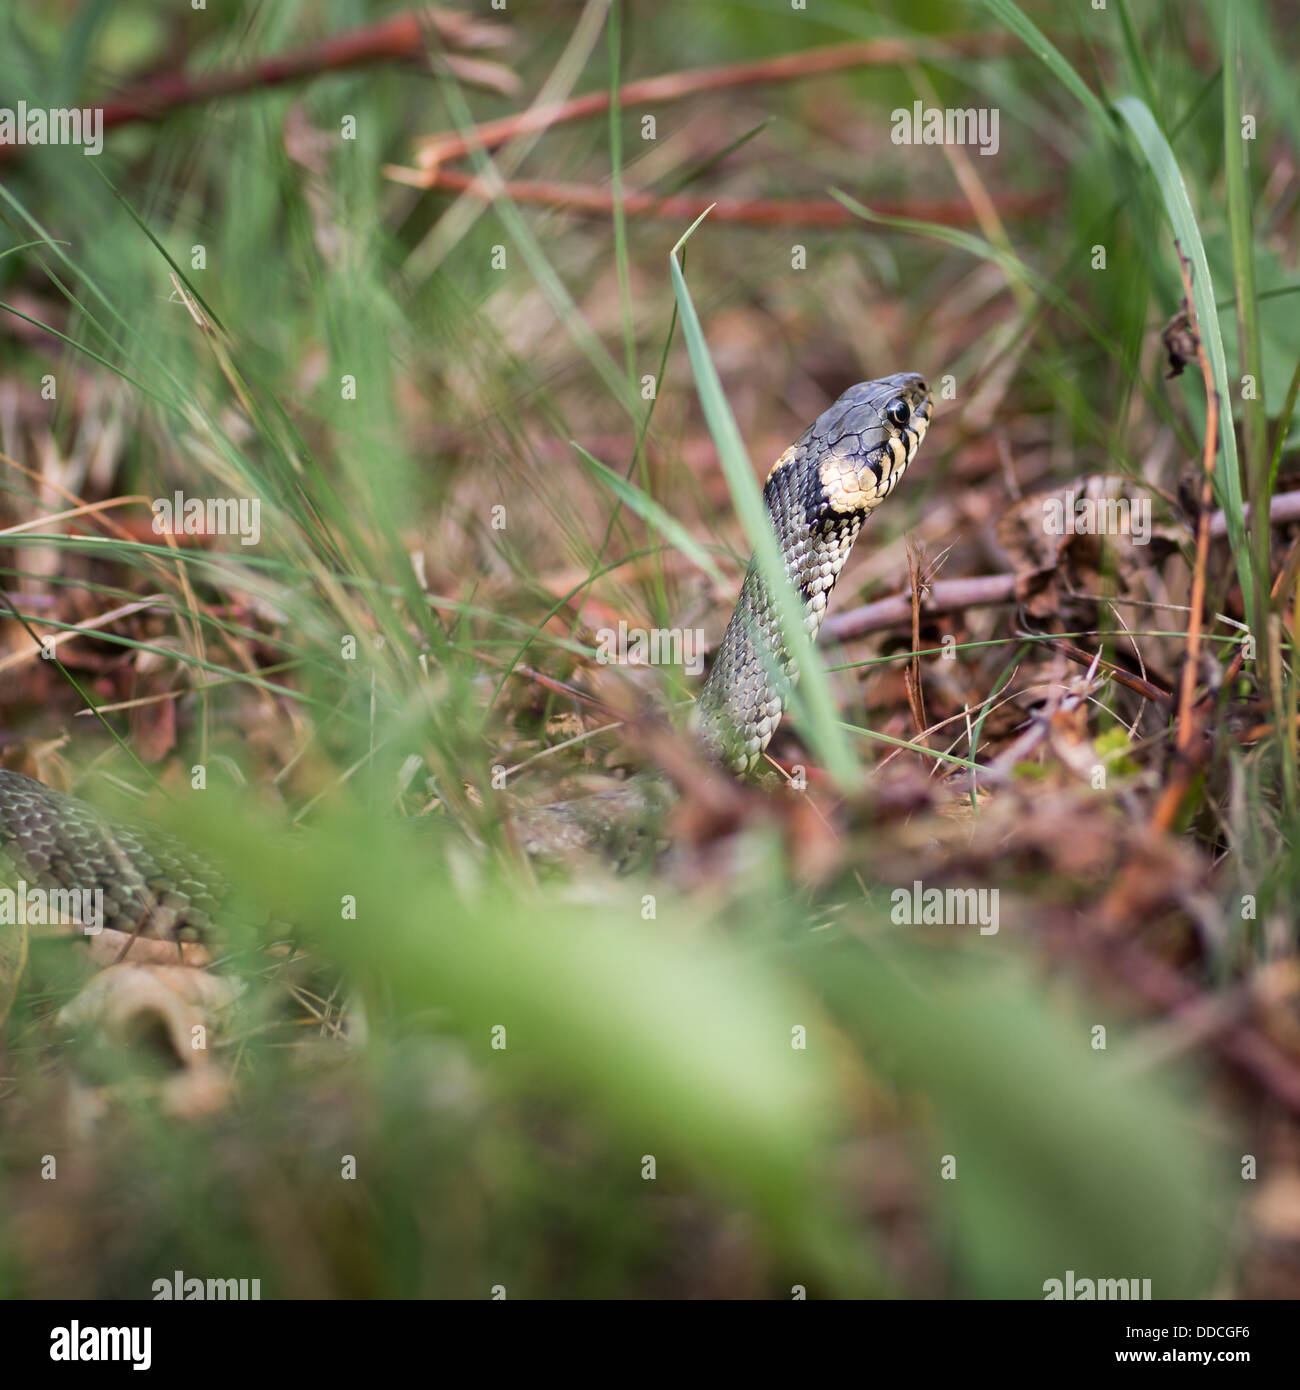 Grass snake (Aka Water snake Natrix Natrix) Stock Photo